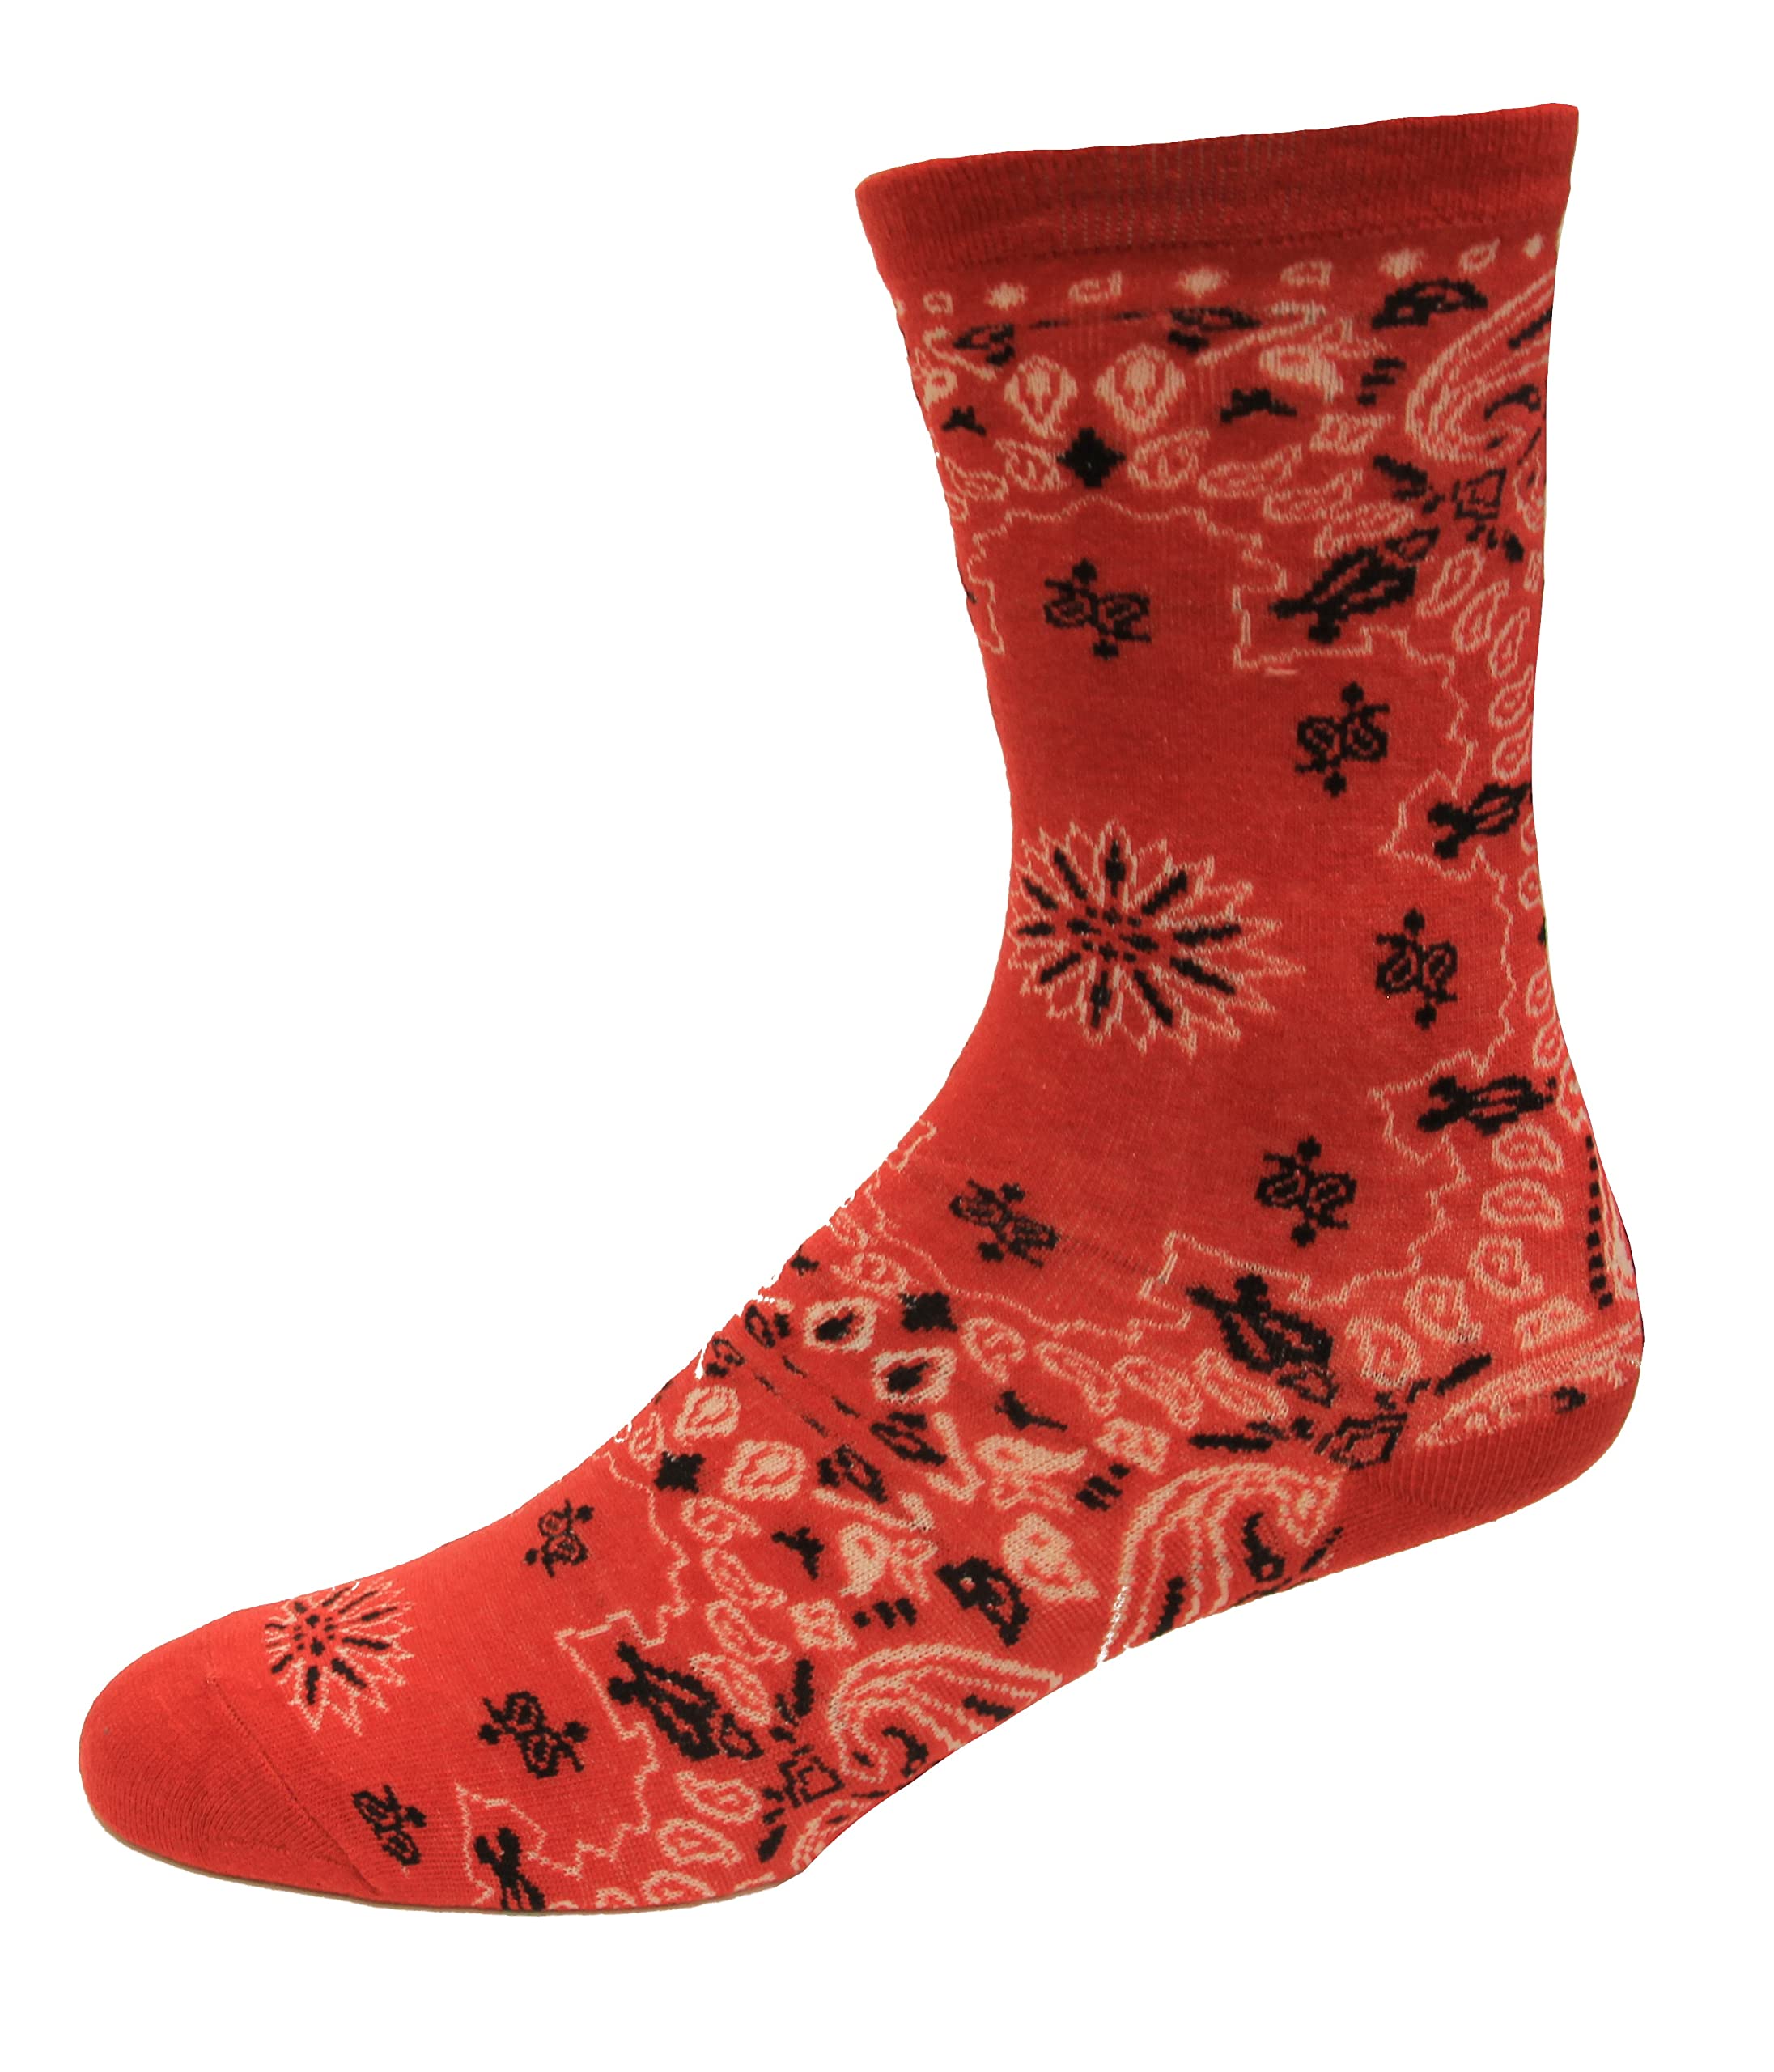 K. Bell Socks Women's Fun Patterns & Designs Crew Socks-1 Pairs-Cool & Cute Novelty Gifts